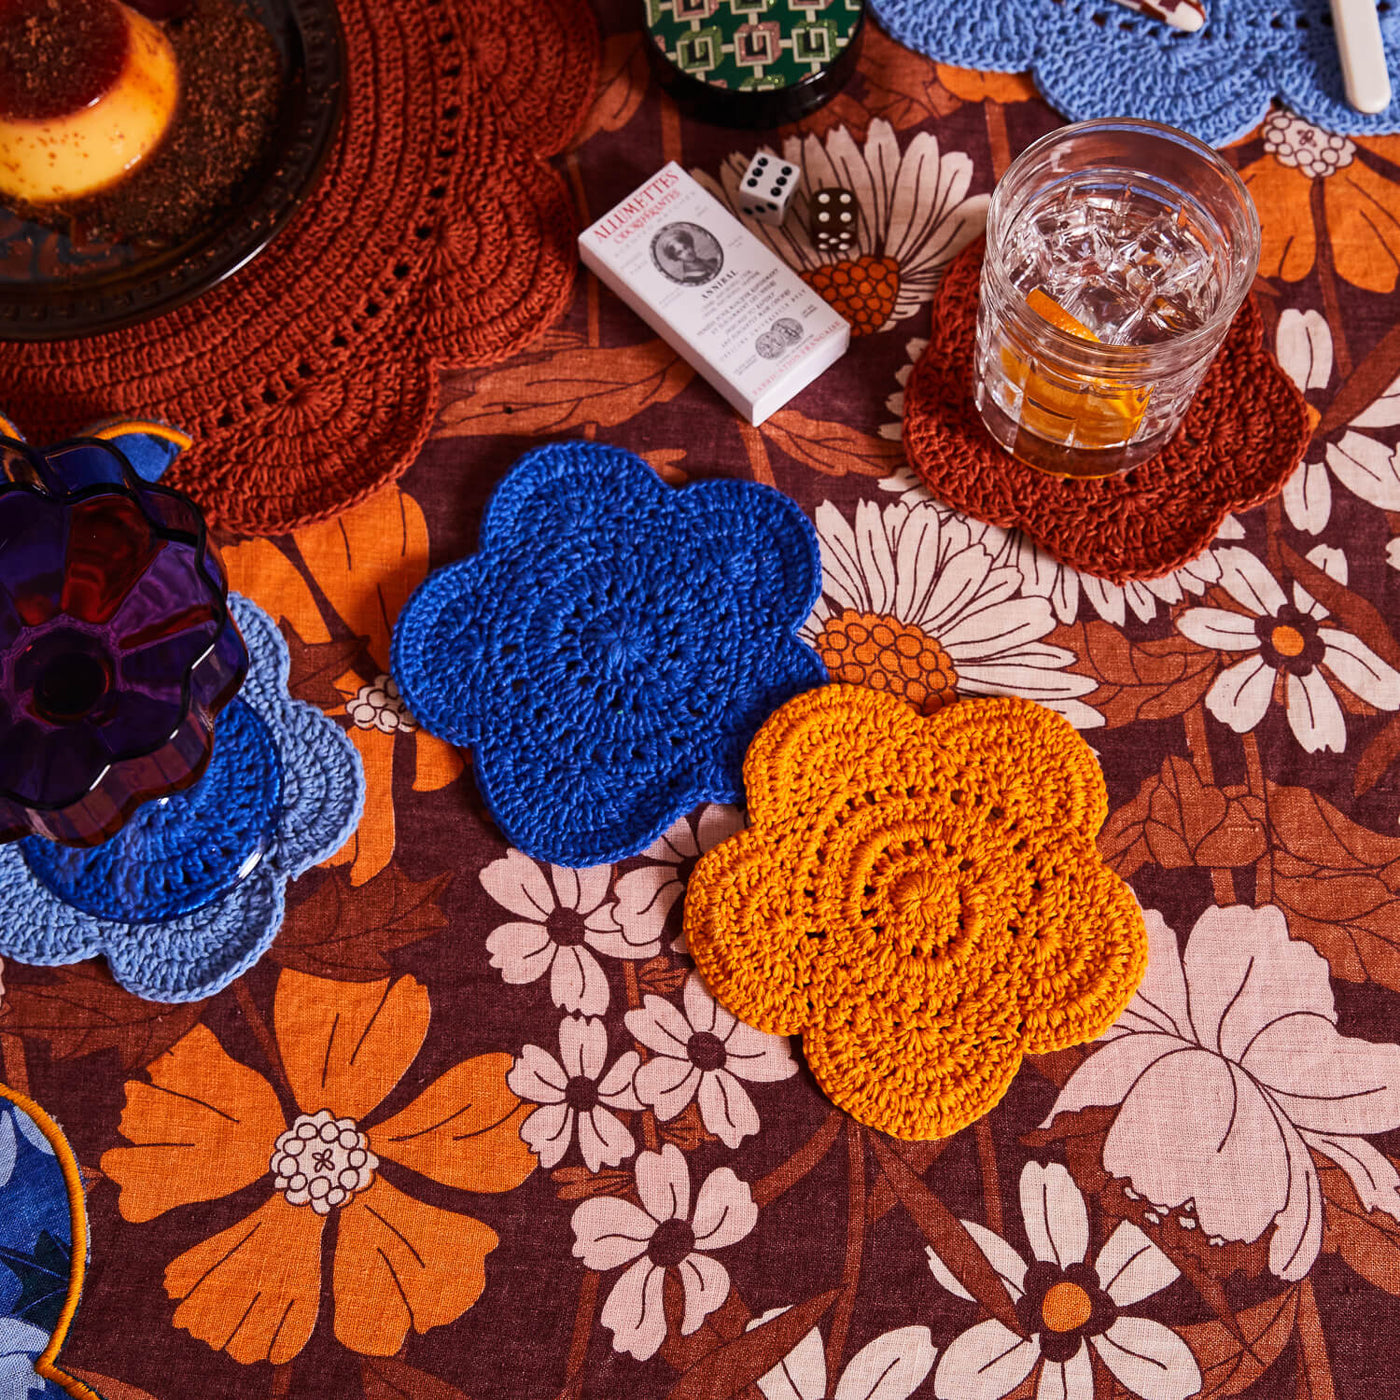 Chumo Crochet Coaster Set - Lapis